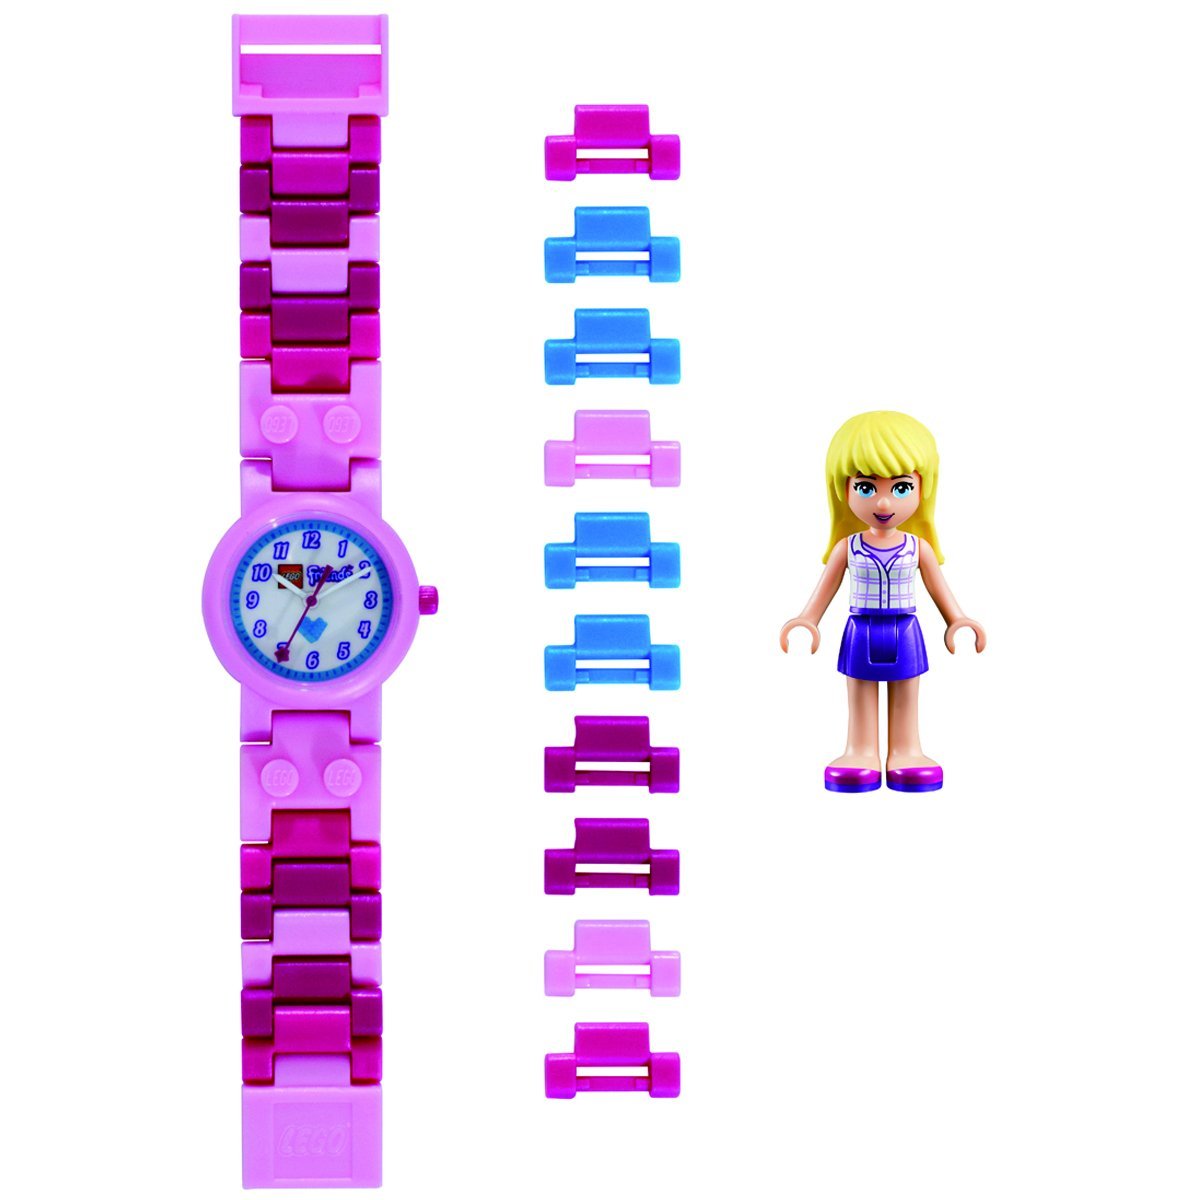 Reloj Infantil Lego 8020172